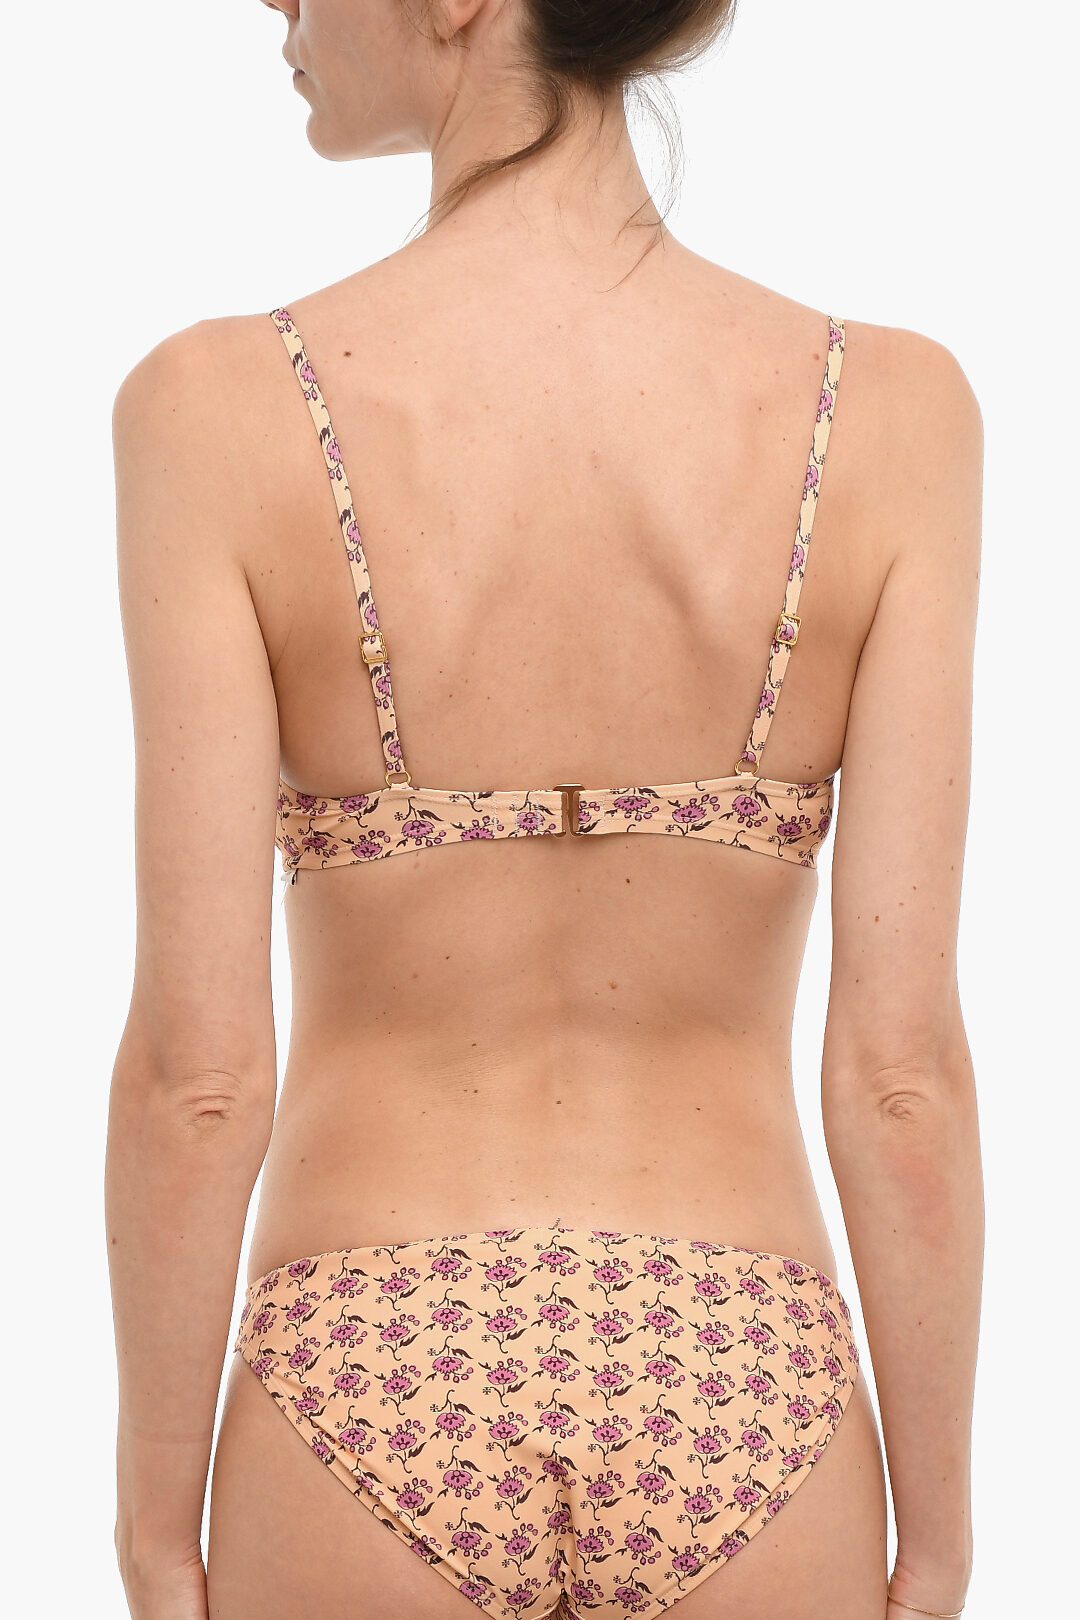 Tory Burch Floral Patterned Underwire Bikini Top women - Glamood